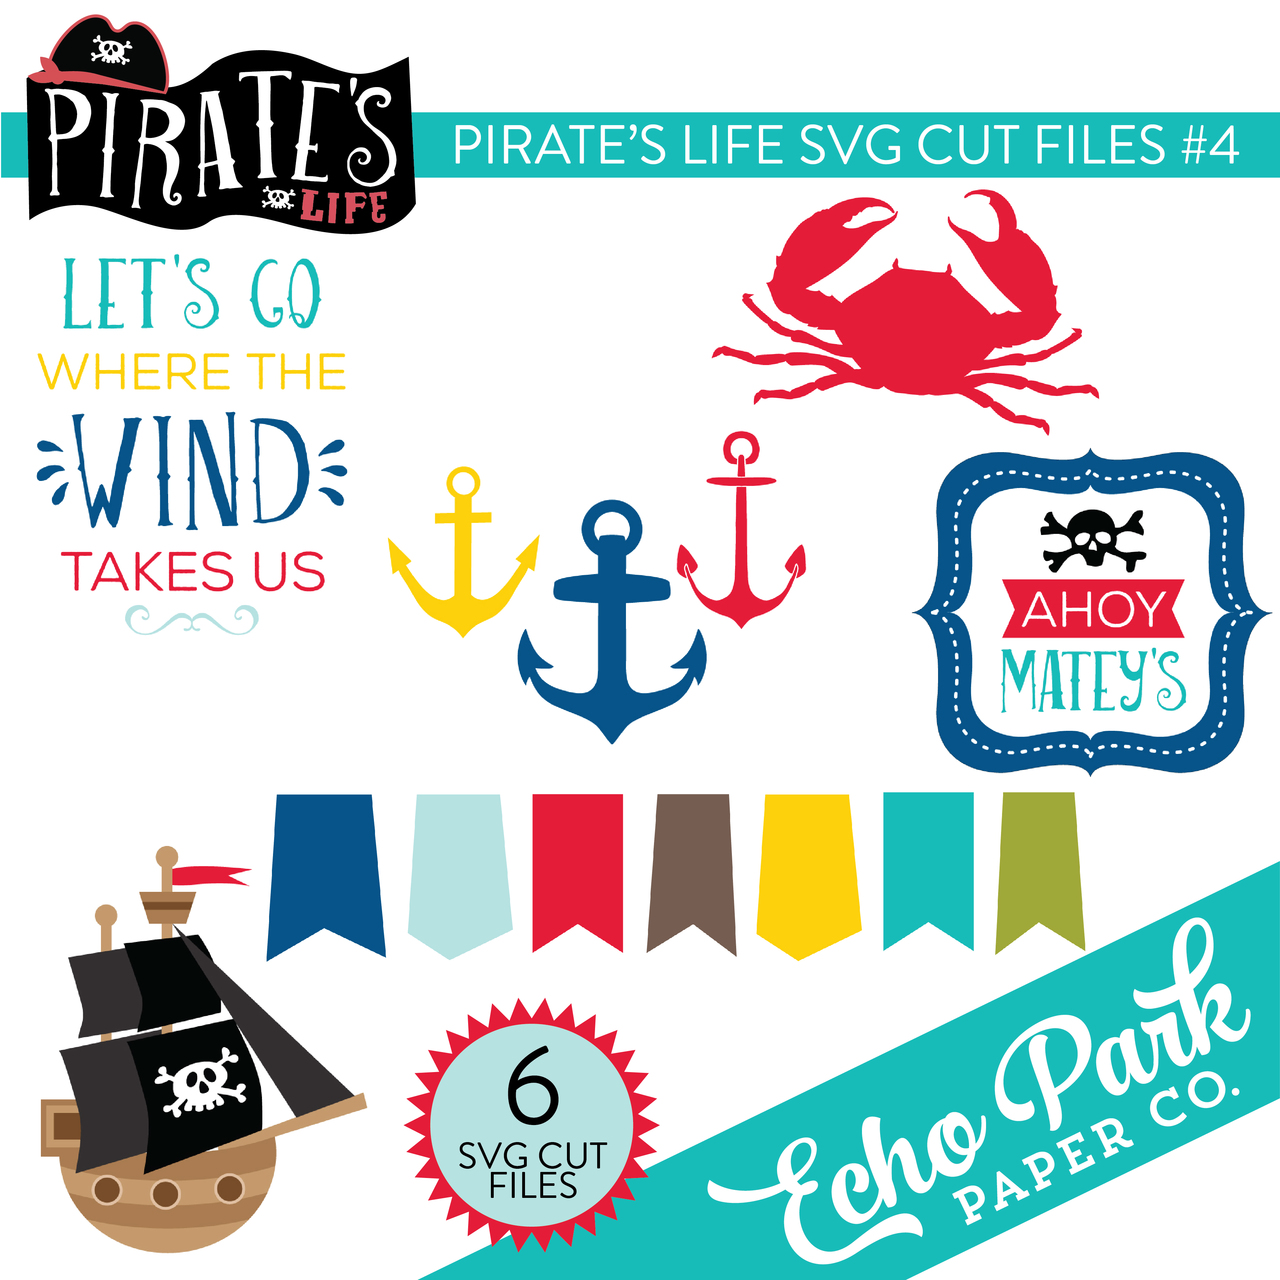 Pirates Life SVG Cut Files #4